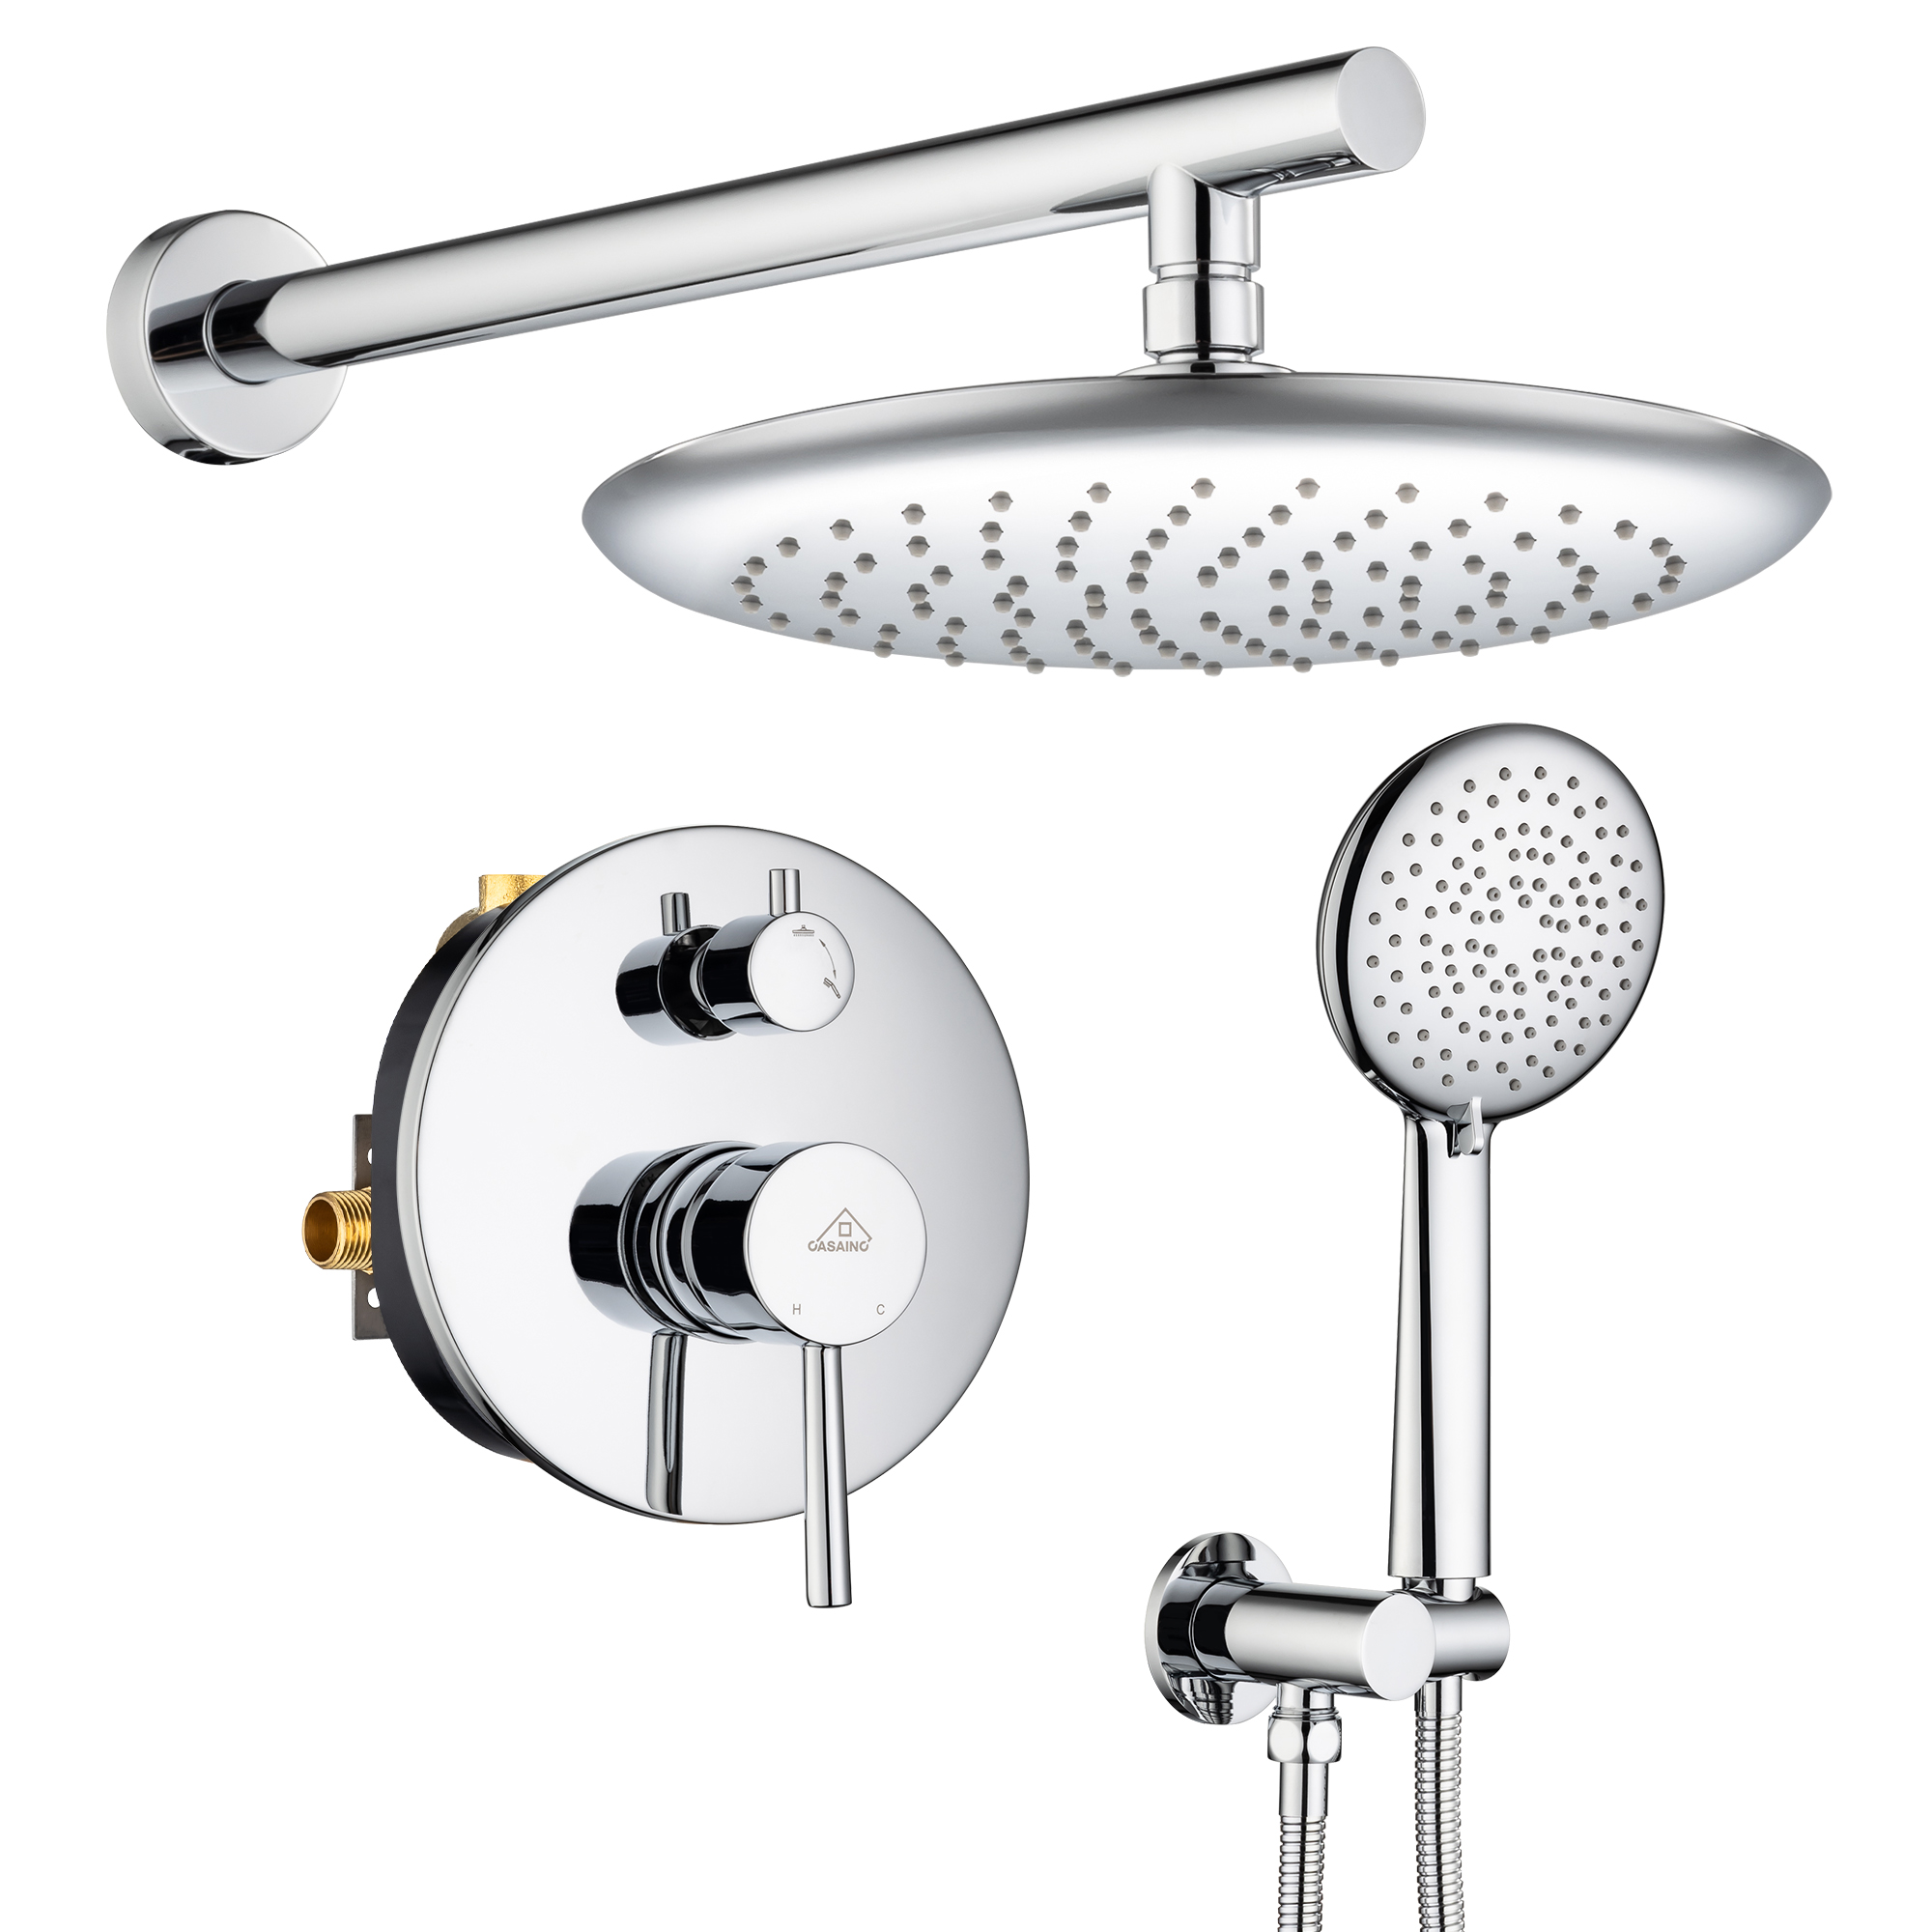 CASAINC 9.5'' Wall-mounted rain shower faucet with pressure balanced valve